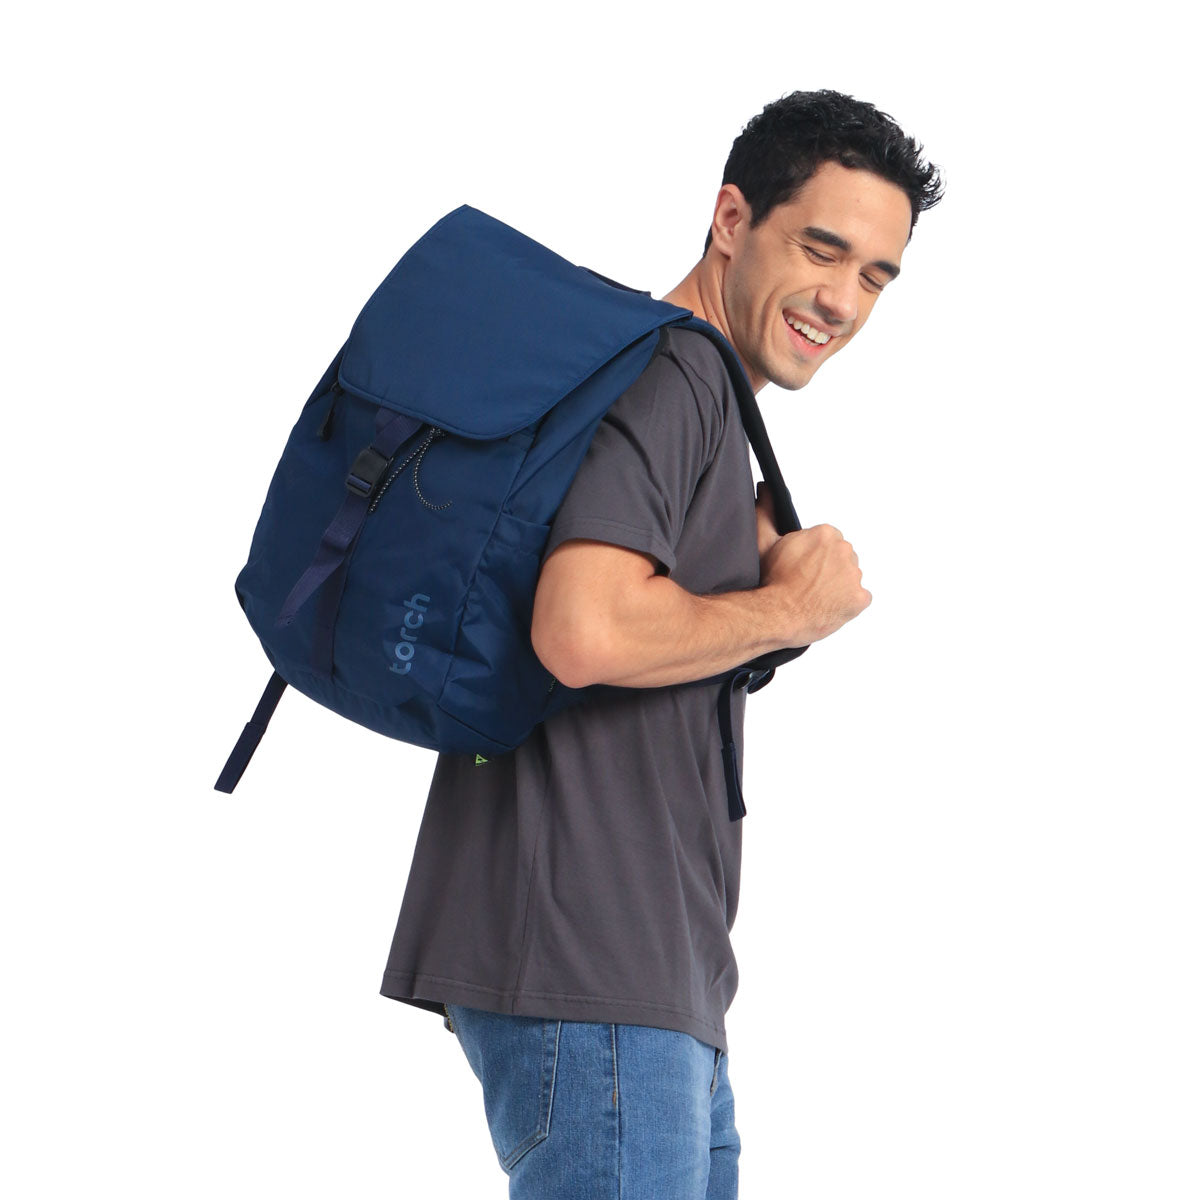 Cuncheon Backpack